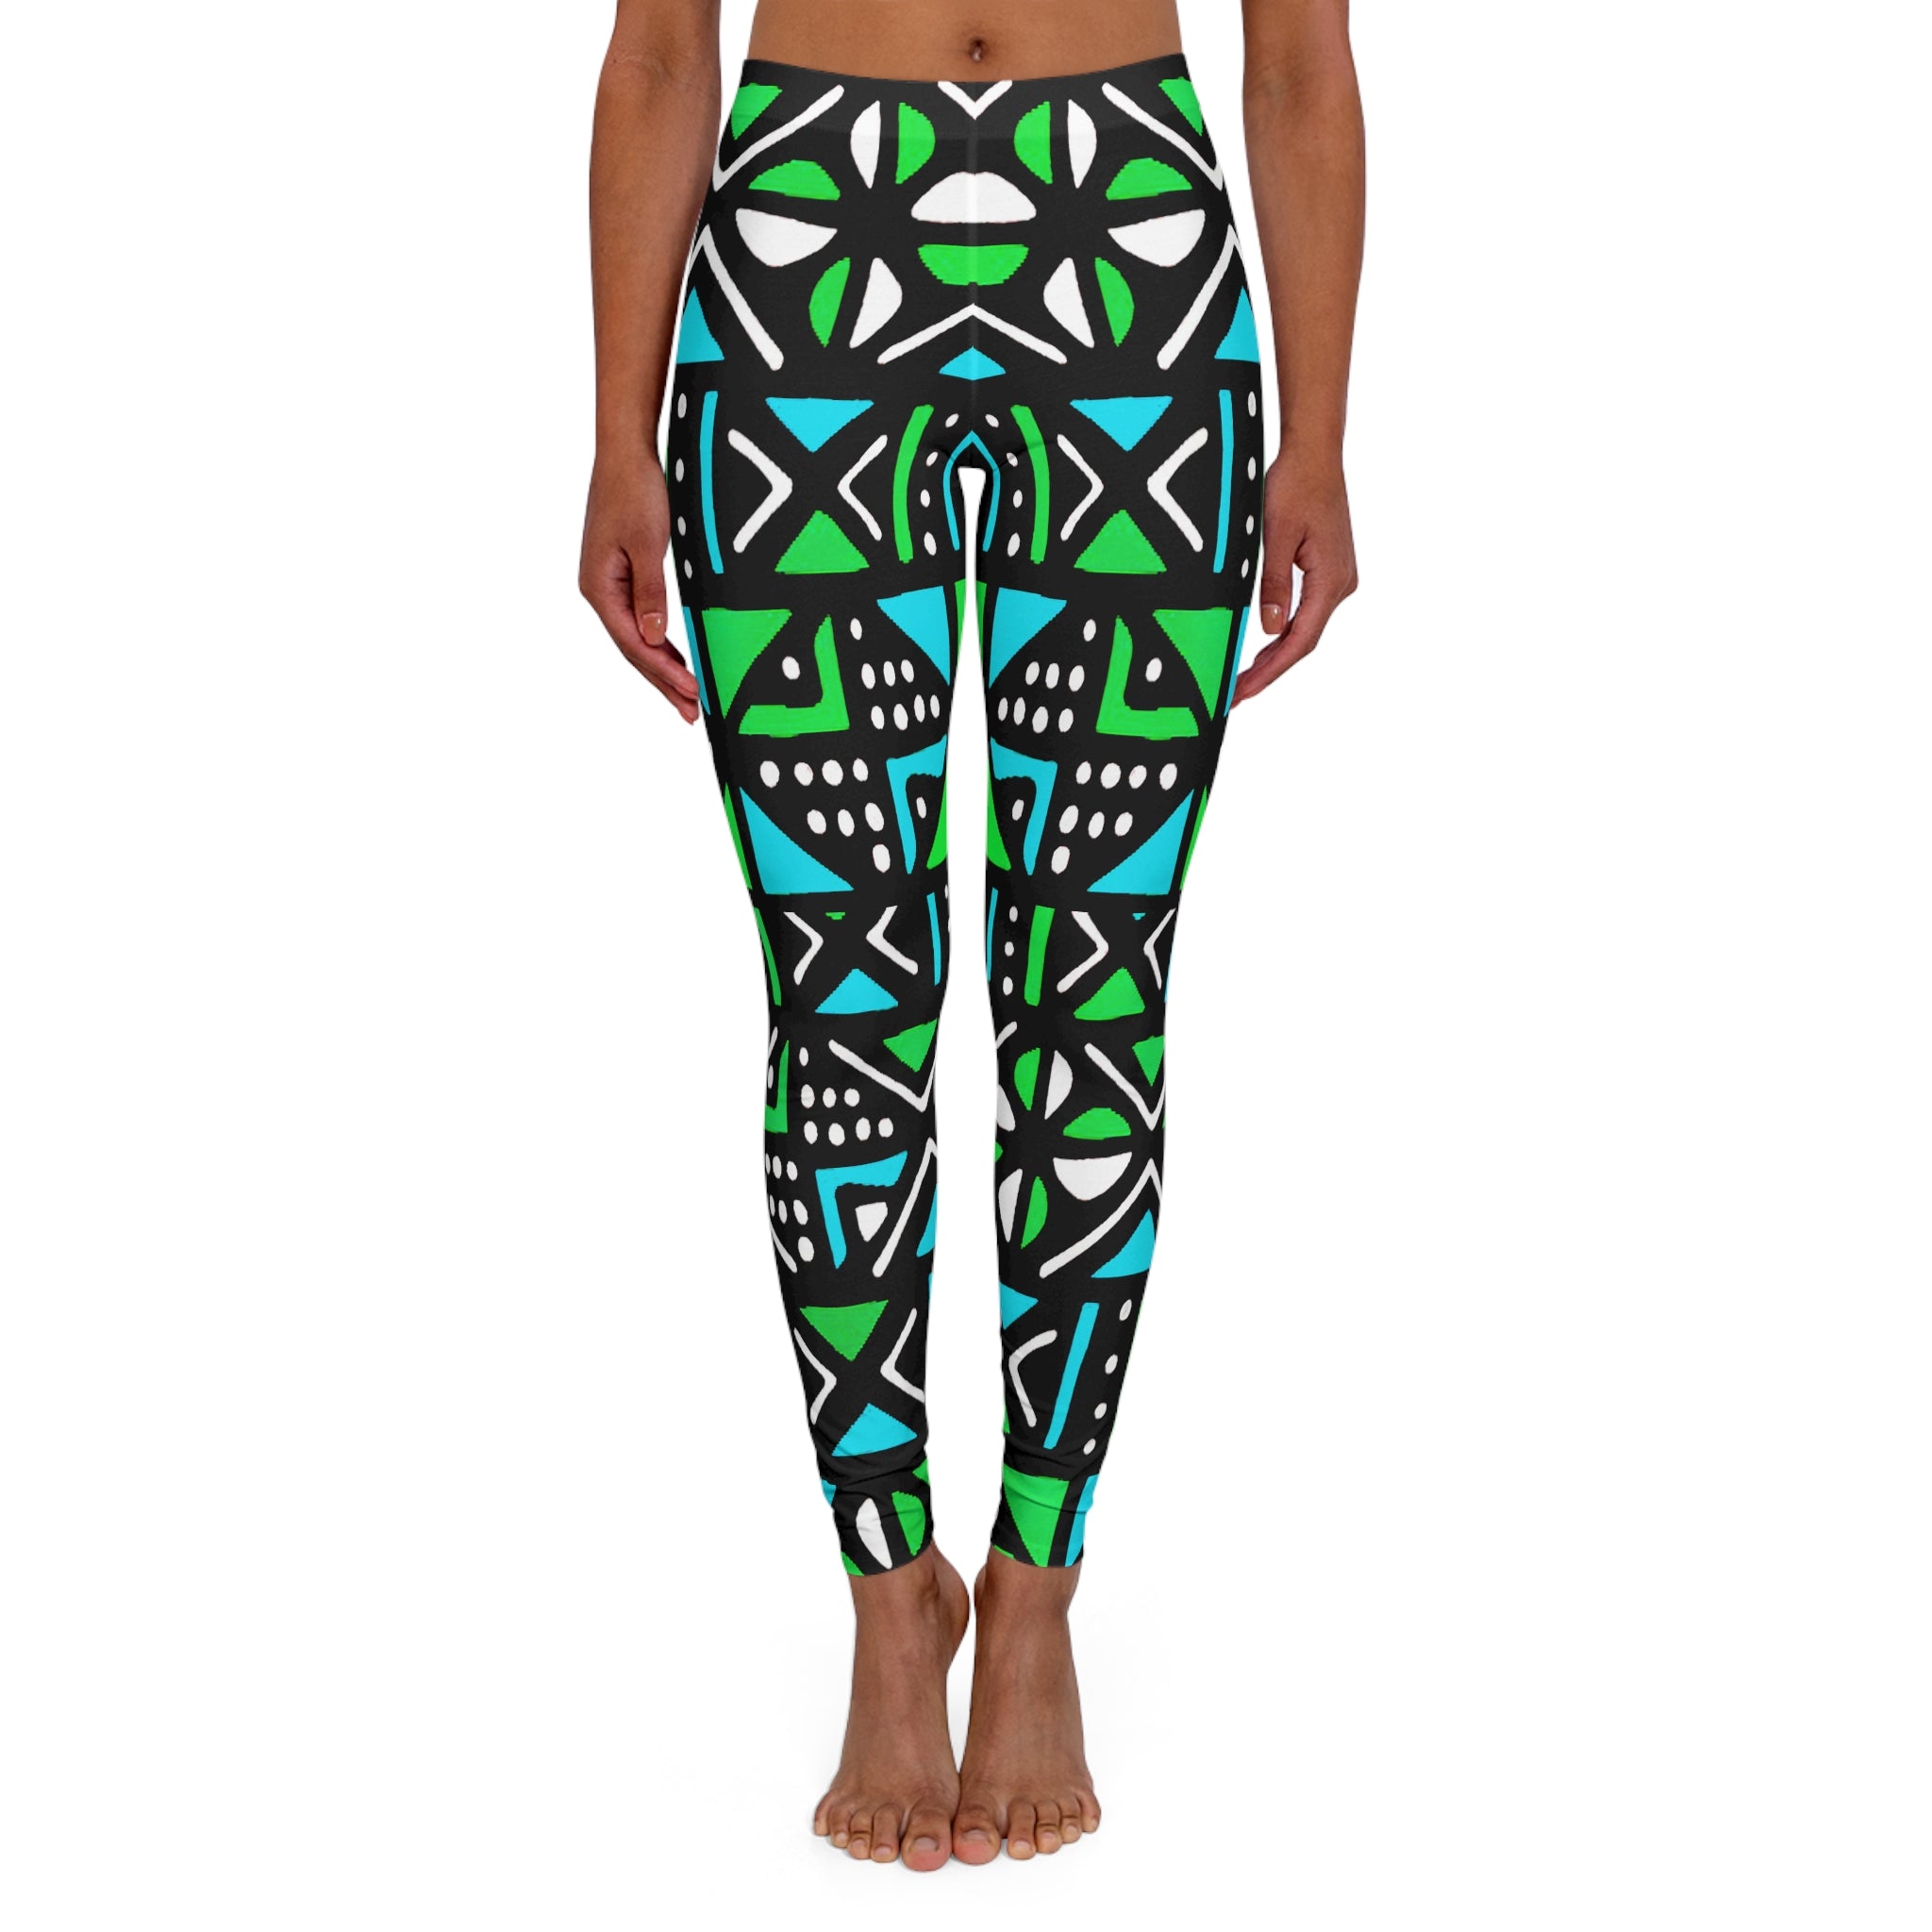 Neon African Leggings Women Mudcloth Print - Bynelo